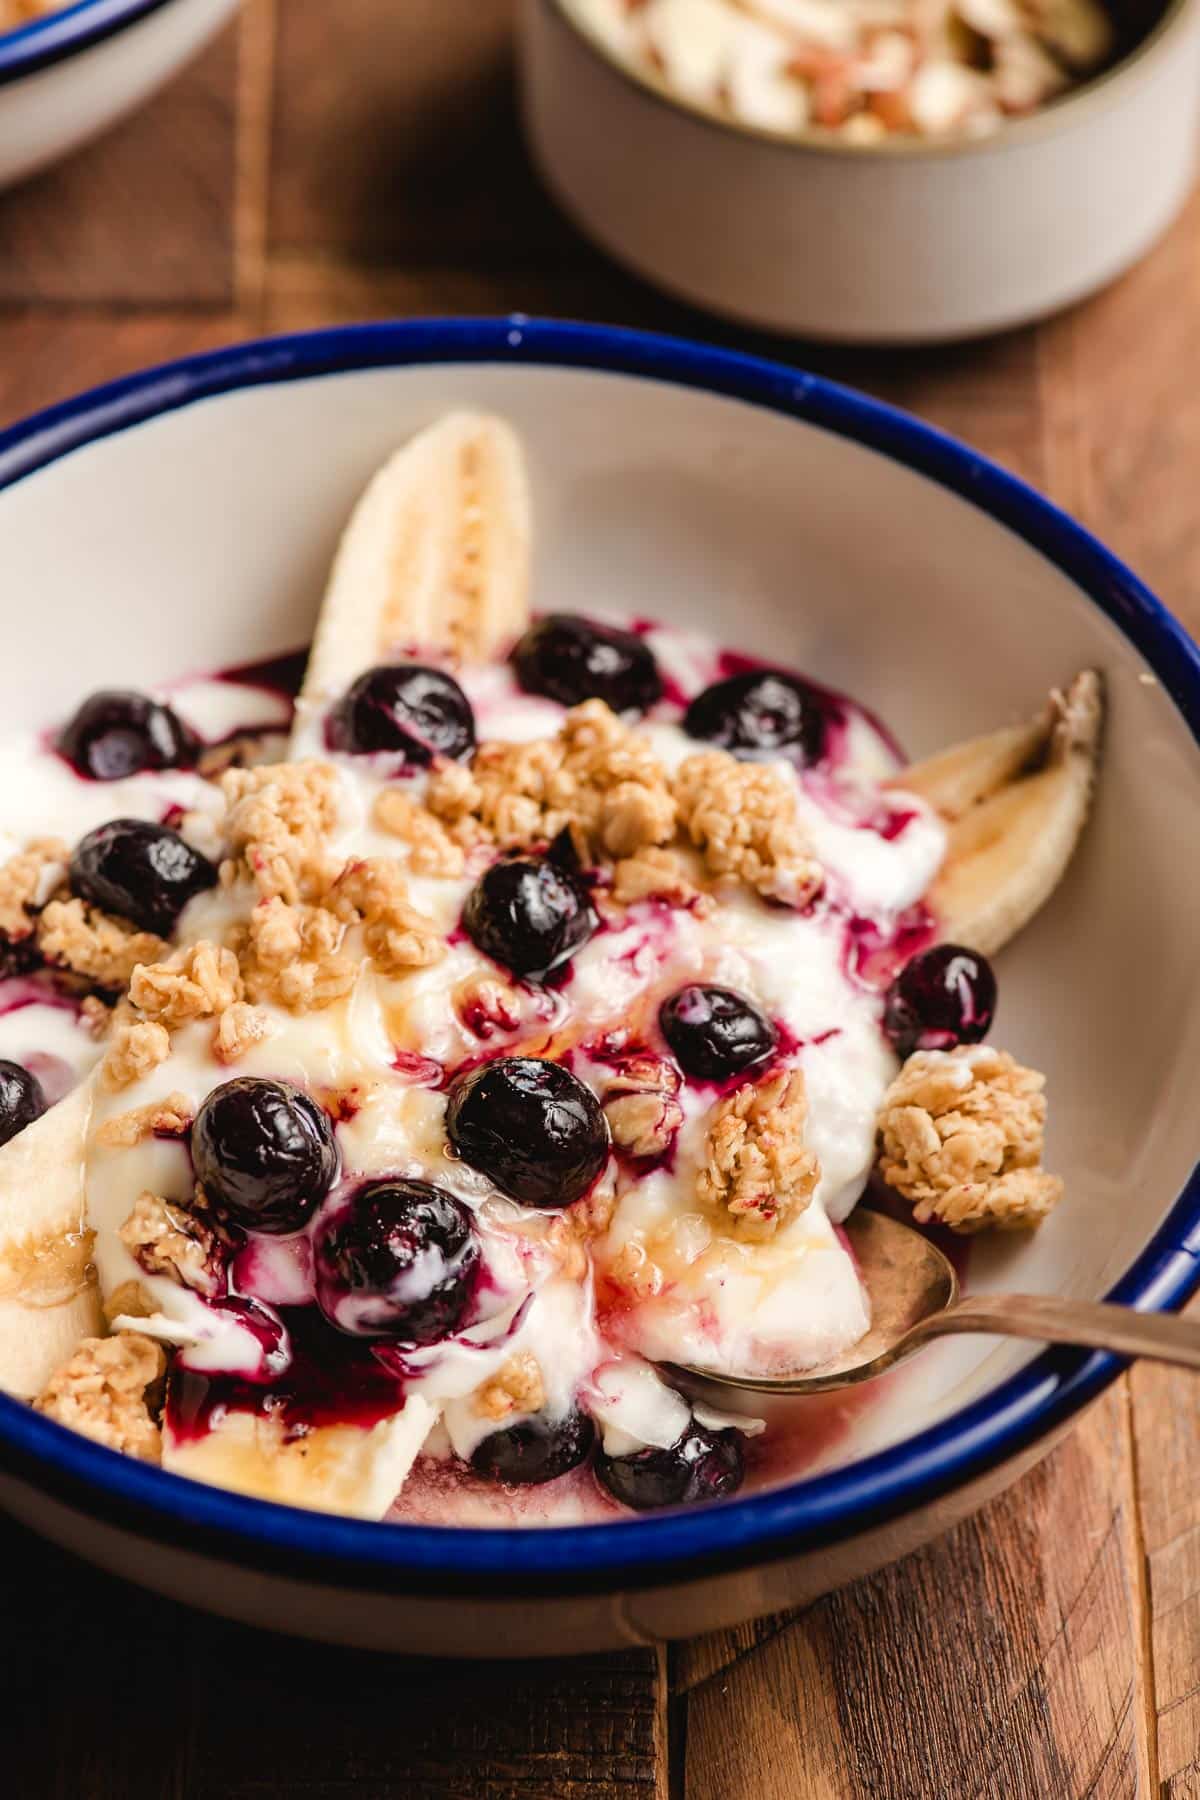 Blue-rimmed bowl with a split banana, yogurt, blueberries, granola, and honey.